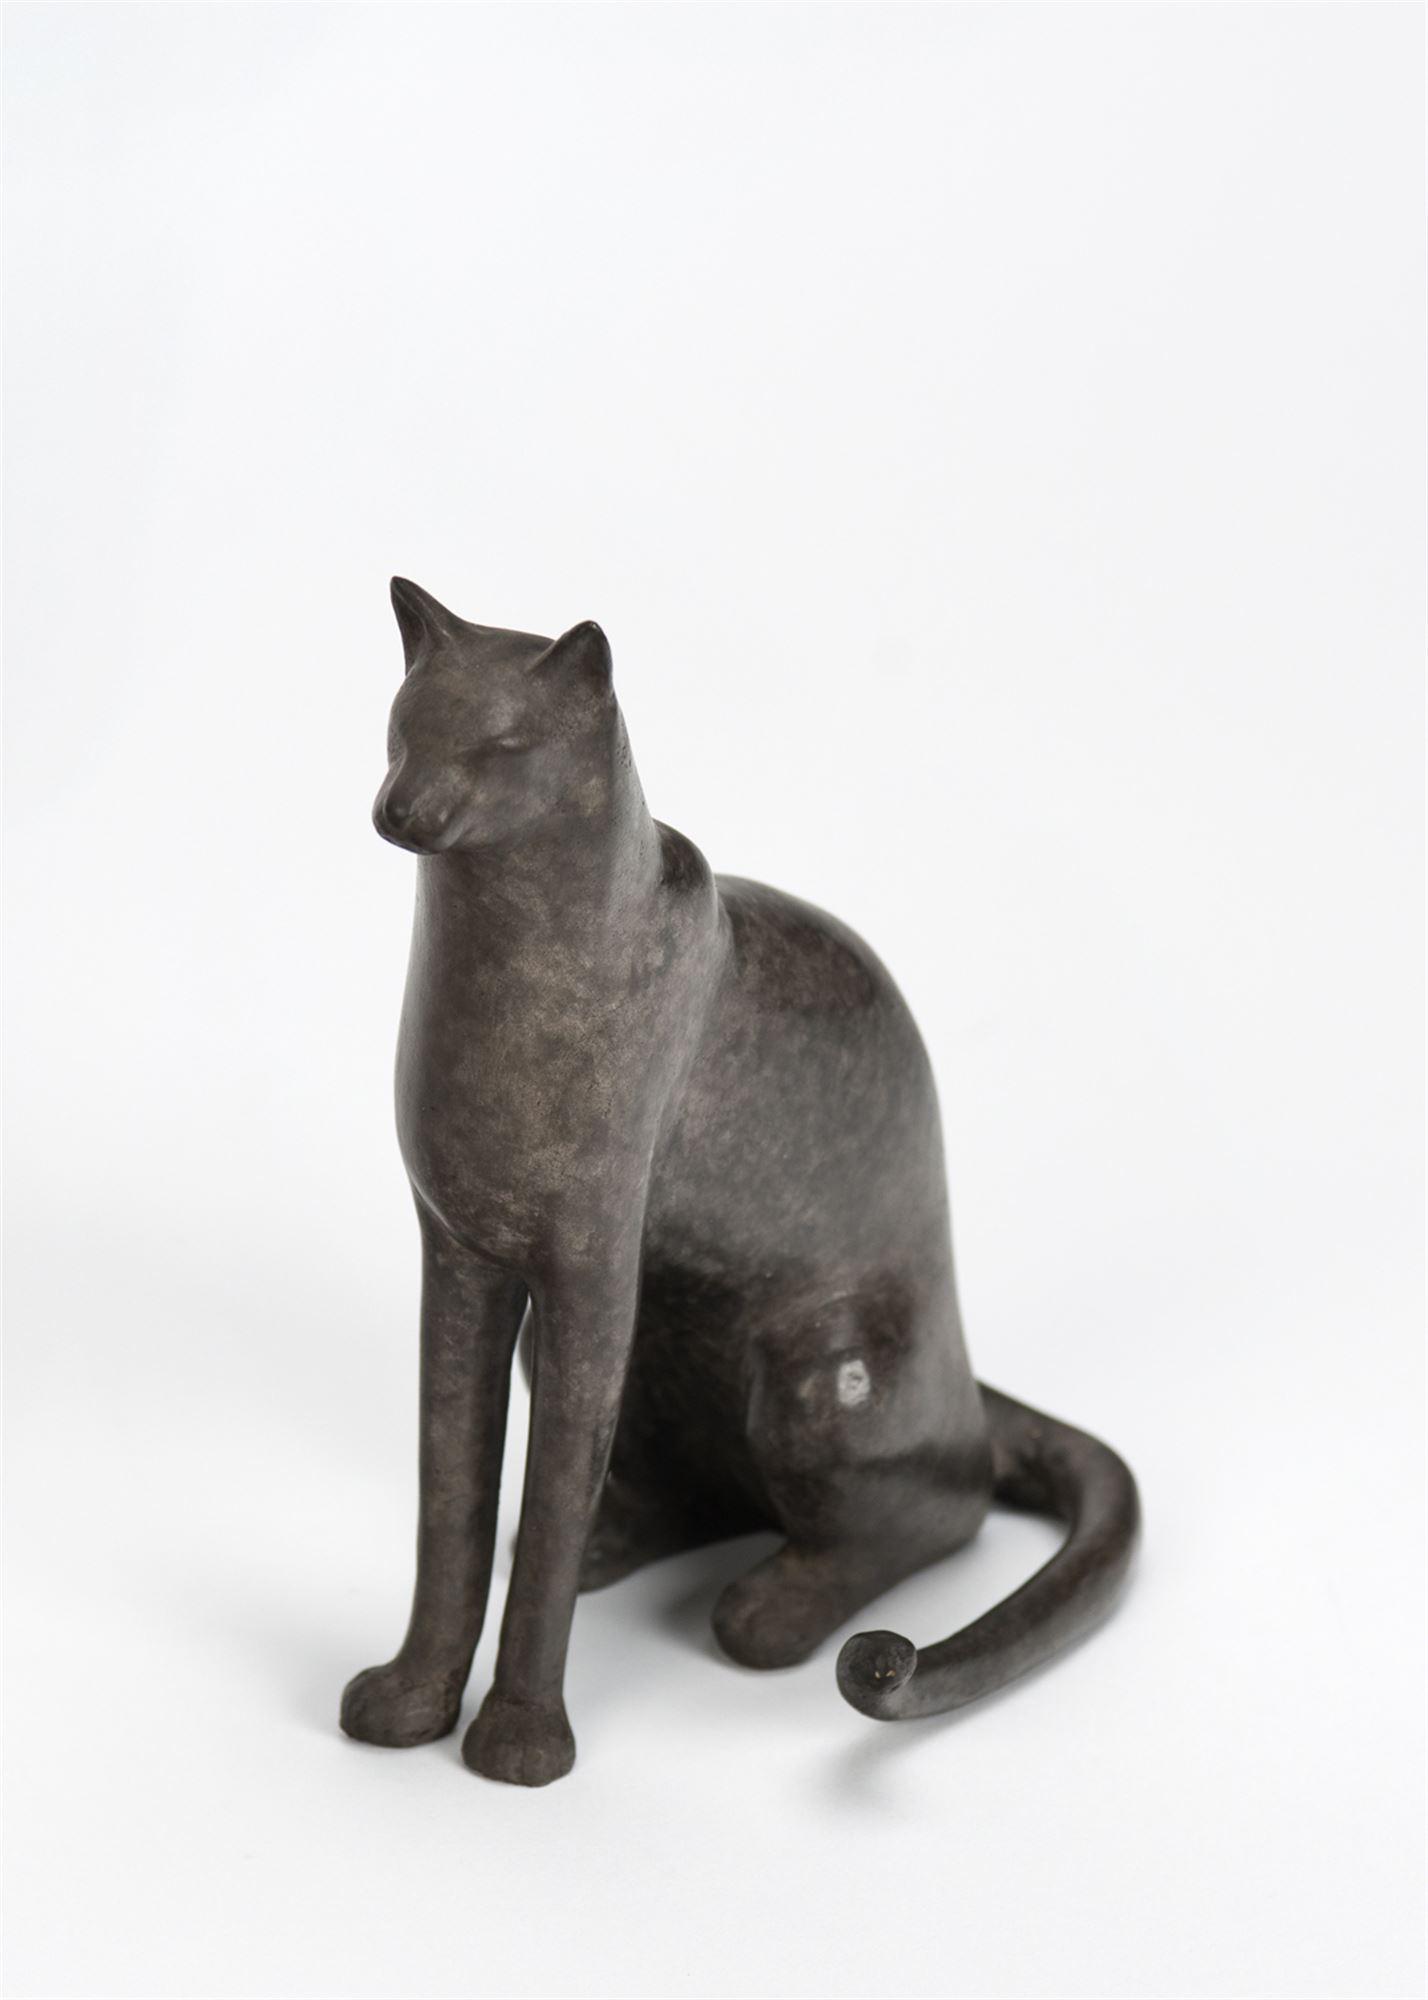 
		                					Gwynn Murrill		                																	
																											<i>Sitting Cat Maquette,</i>  
																																																					bronze, edition of 9, 
																																								5 3/4 x 5 x 3 1/4 inches 
																								
		                				